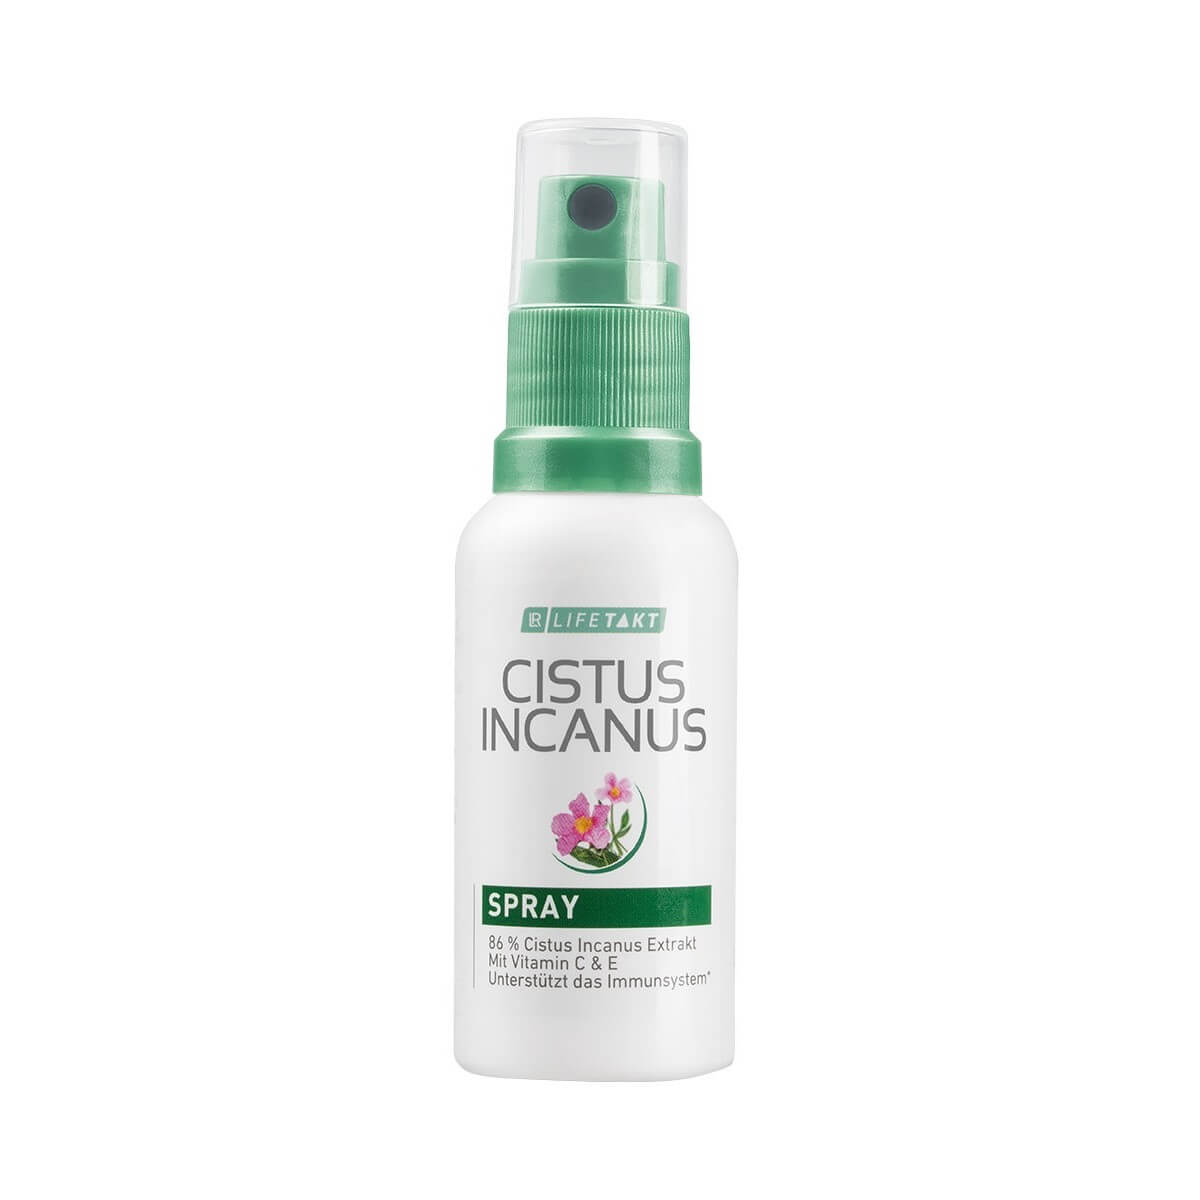 Cistus Incanus Spray with 86% extract for healthy immune system